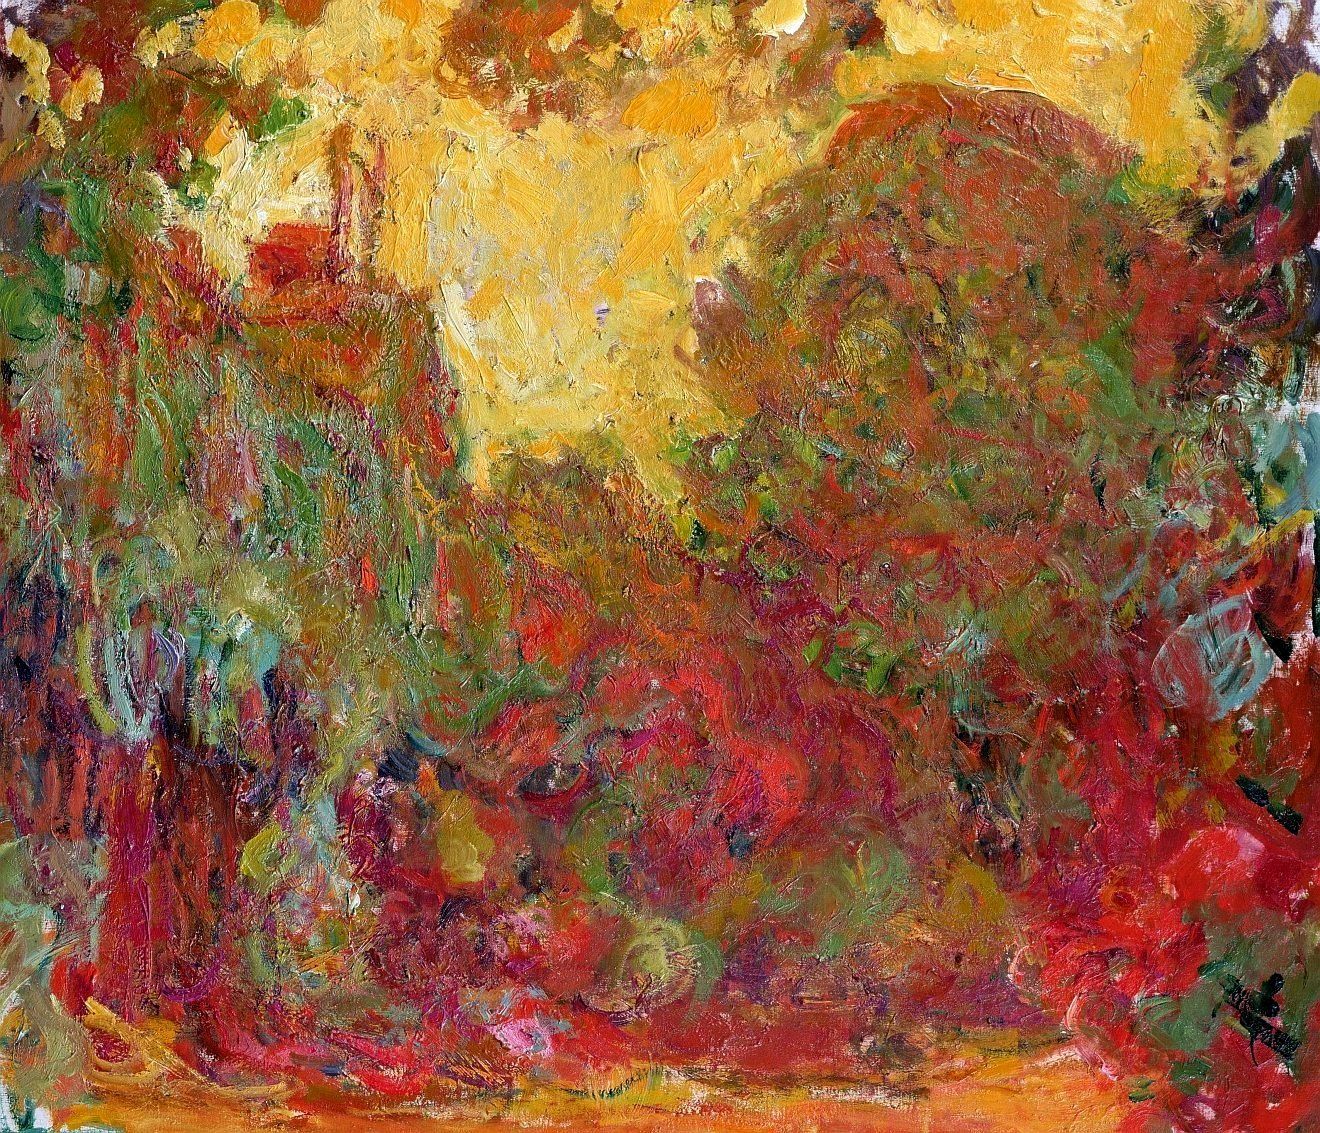 Claude+Monet-1840-1926 (371).jpg